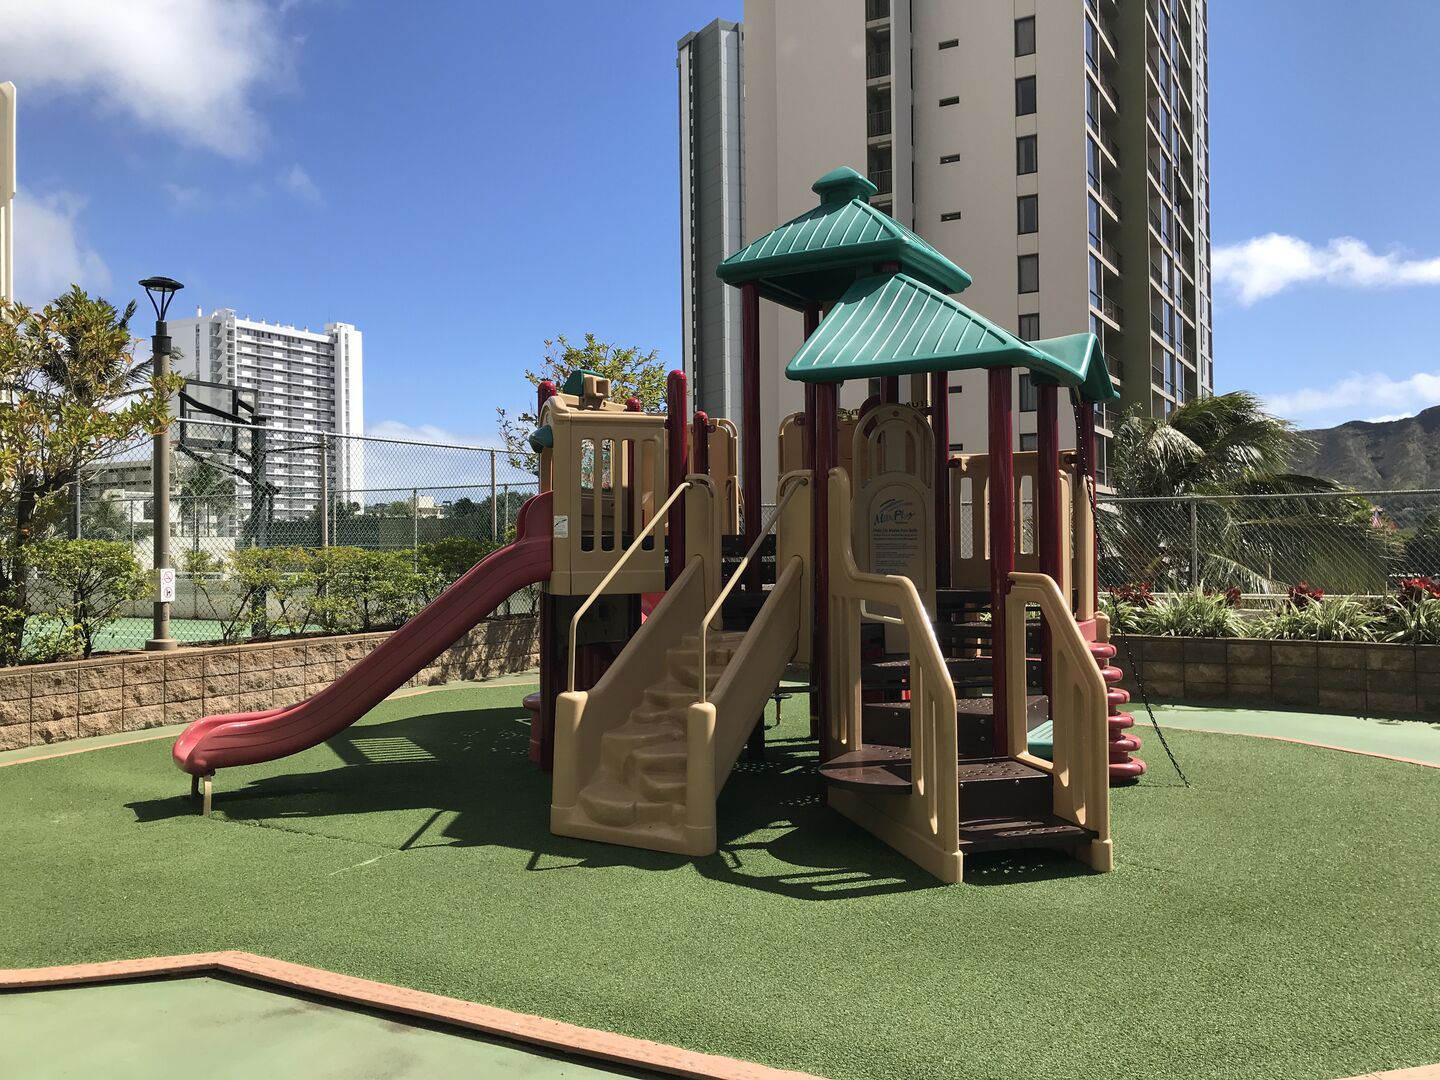 Children's playground located on the 6th floor recreation deck